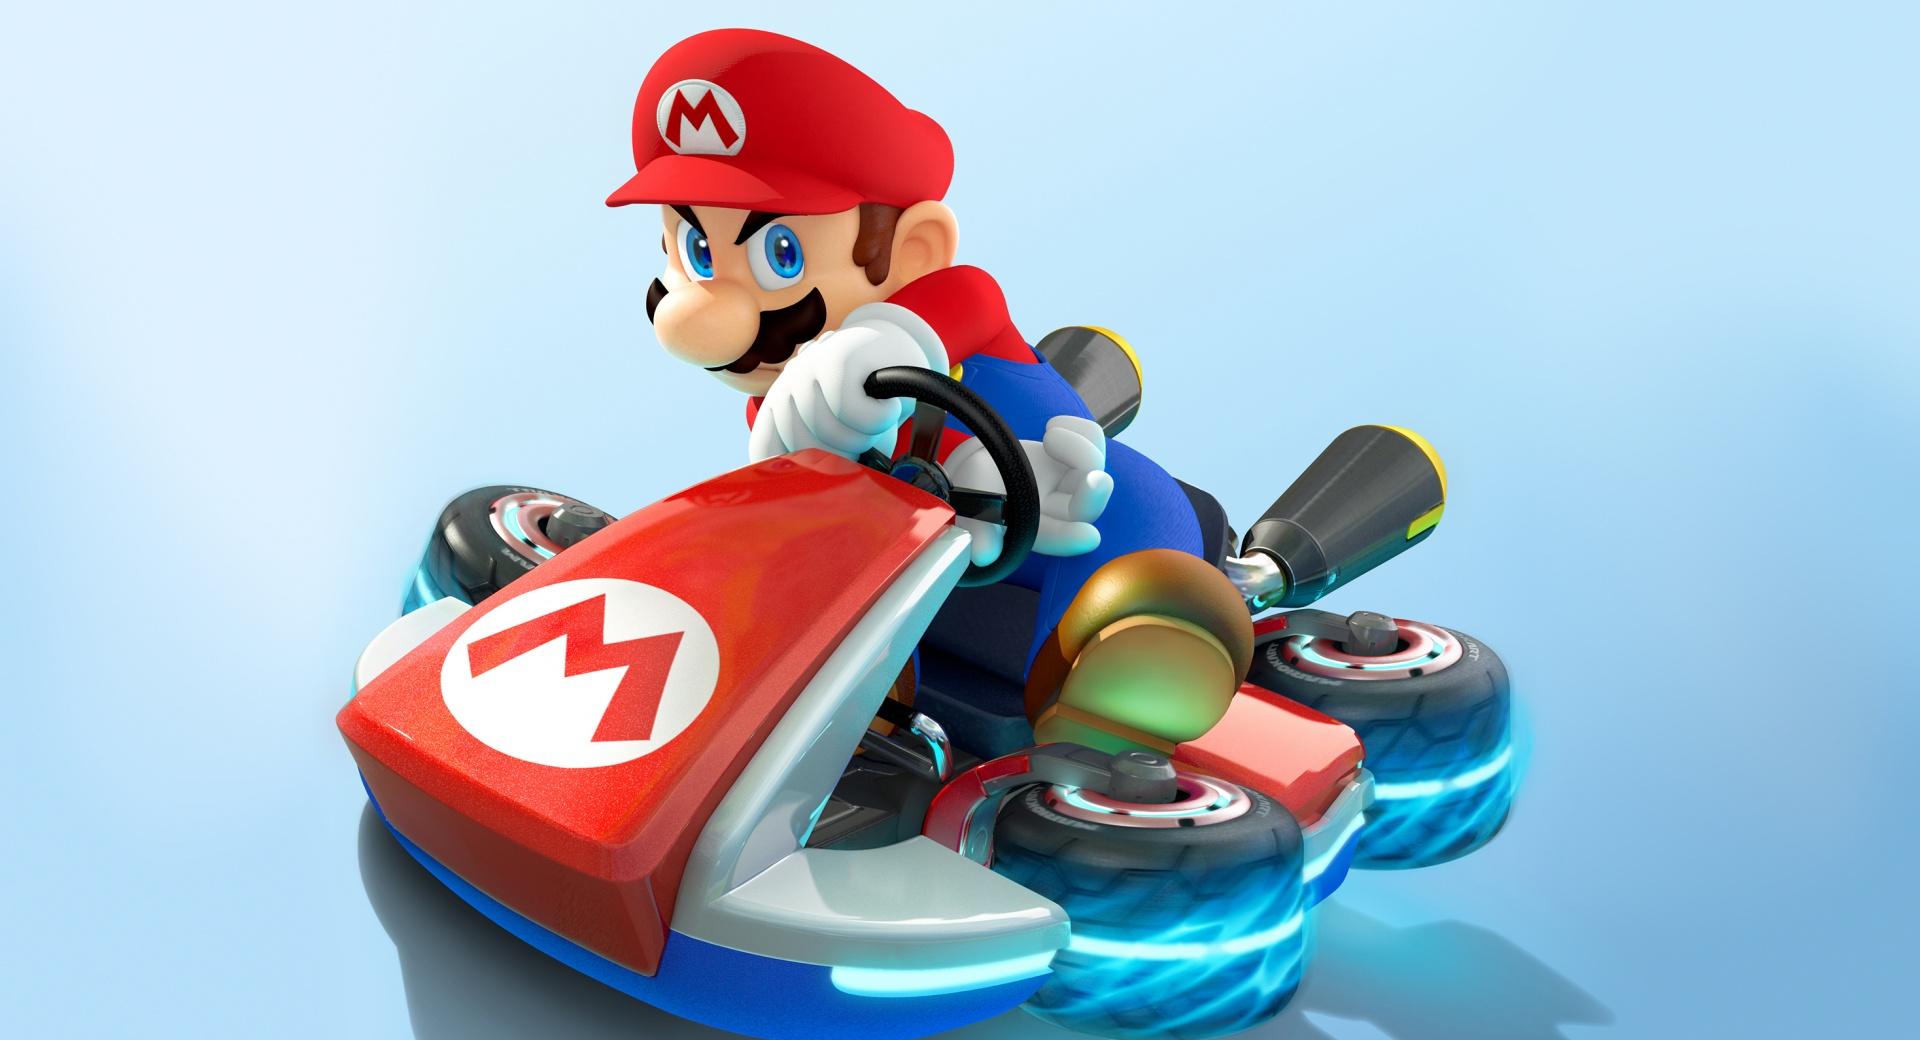 Mario Kart 8 - Mario at 1600 x 1200 size wallpapers HD quality